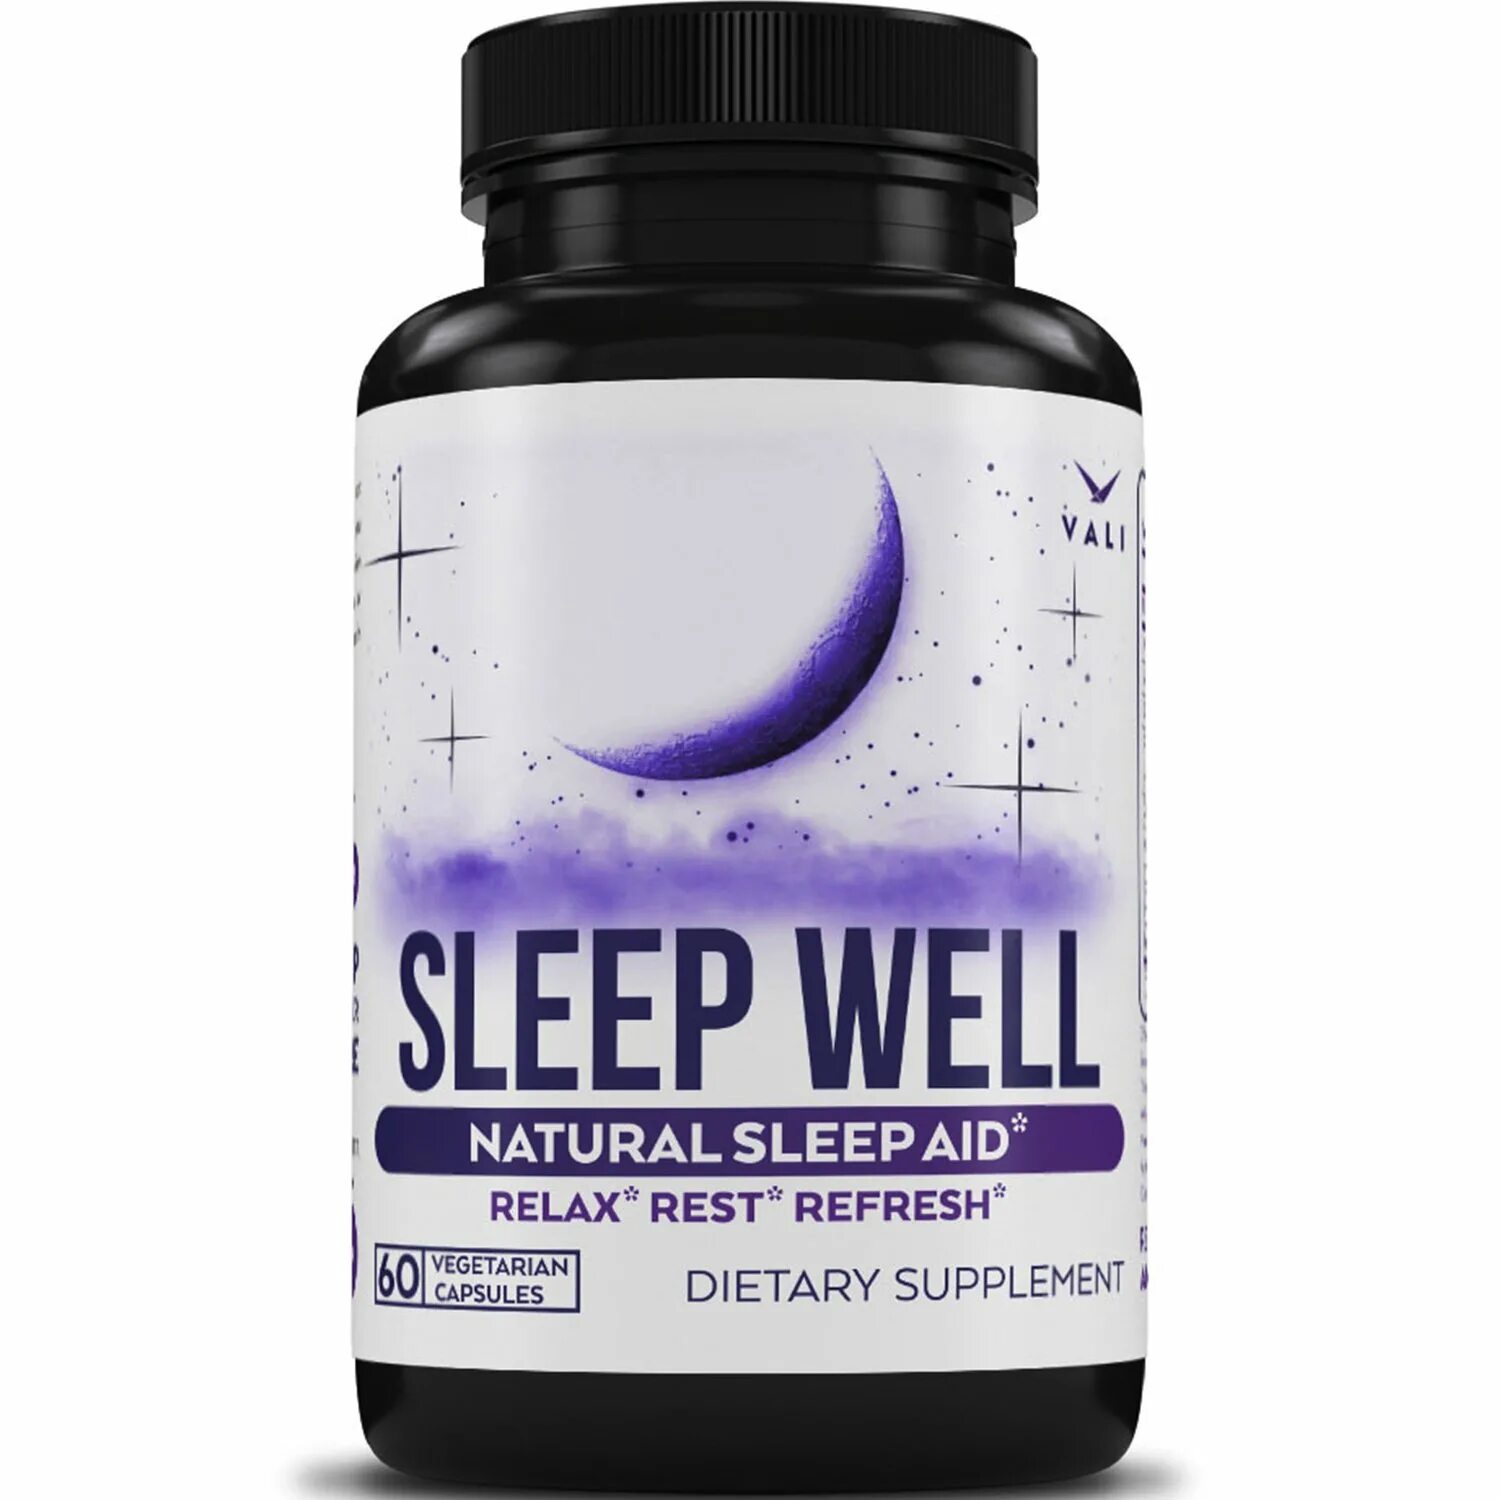 Sleep well cg5 текст. Мелатонин Хербал. Natural Sleep Nutraxin. Sleep well картинки. Мелатонин витамины.